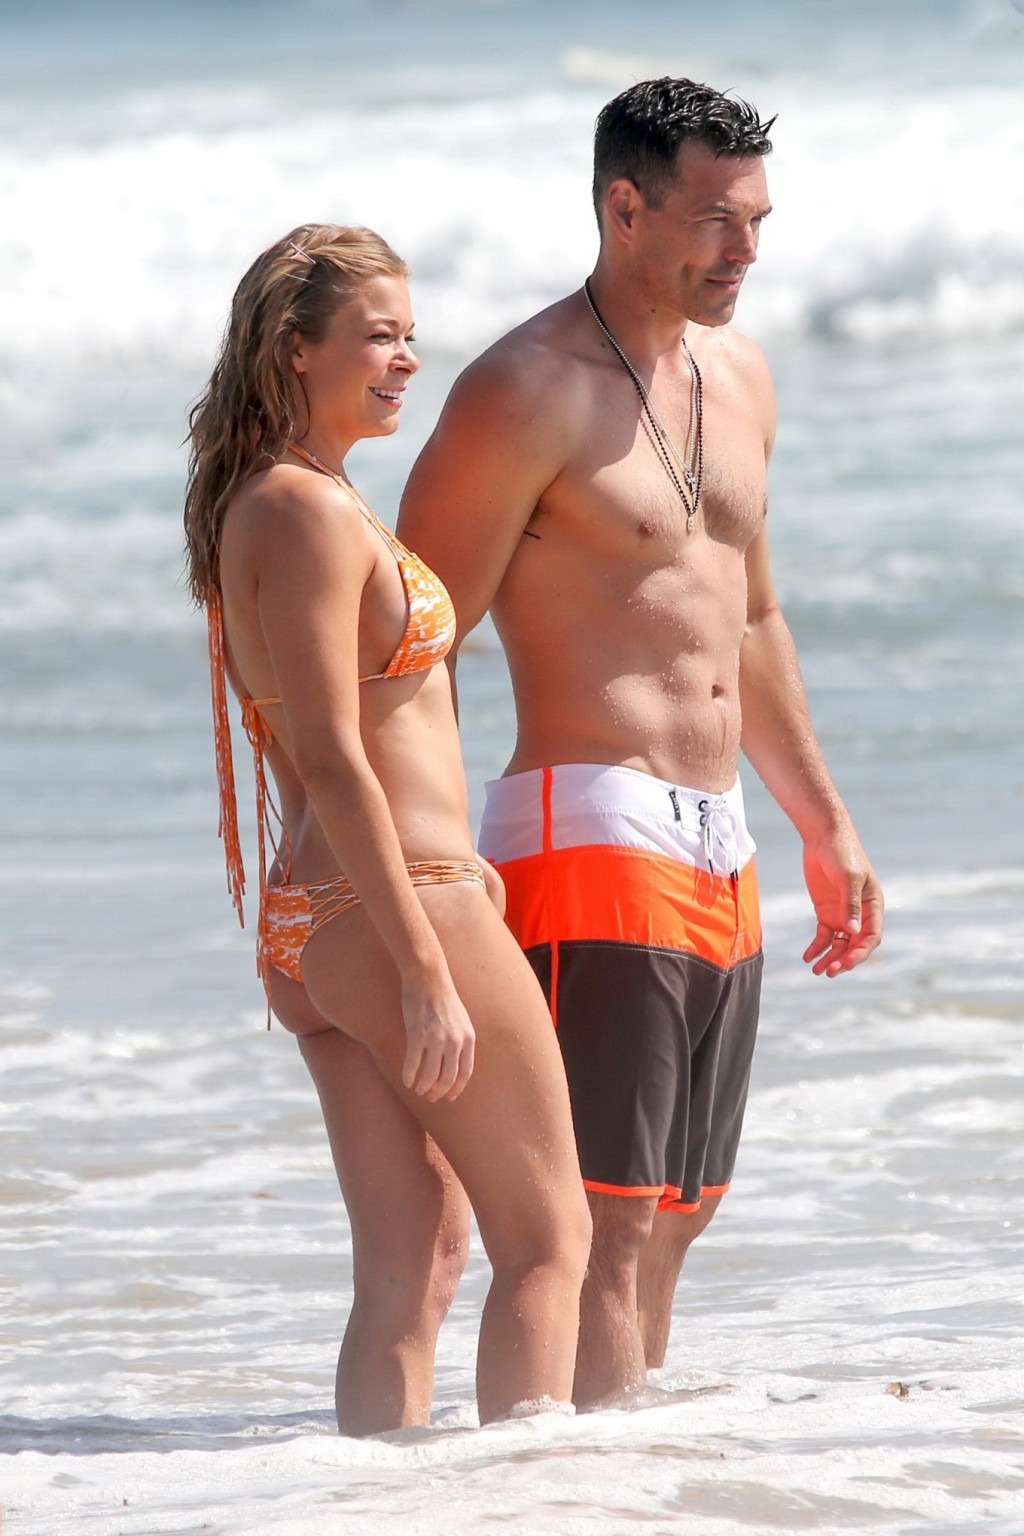 LeAnn Rimes wearing tiny orange bikini at the beach in Los Angeles #75228082